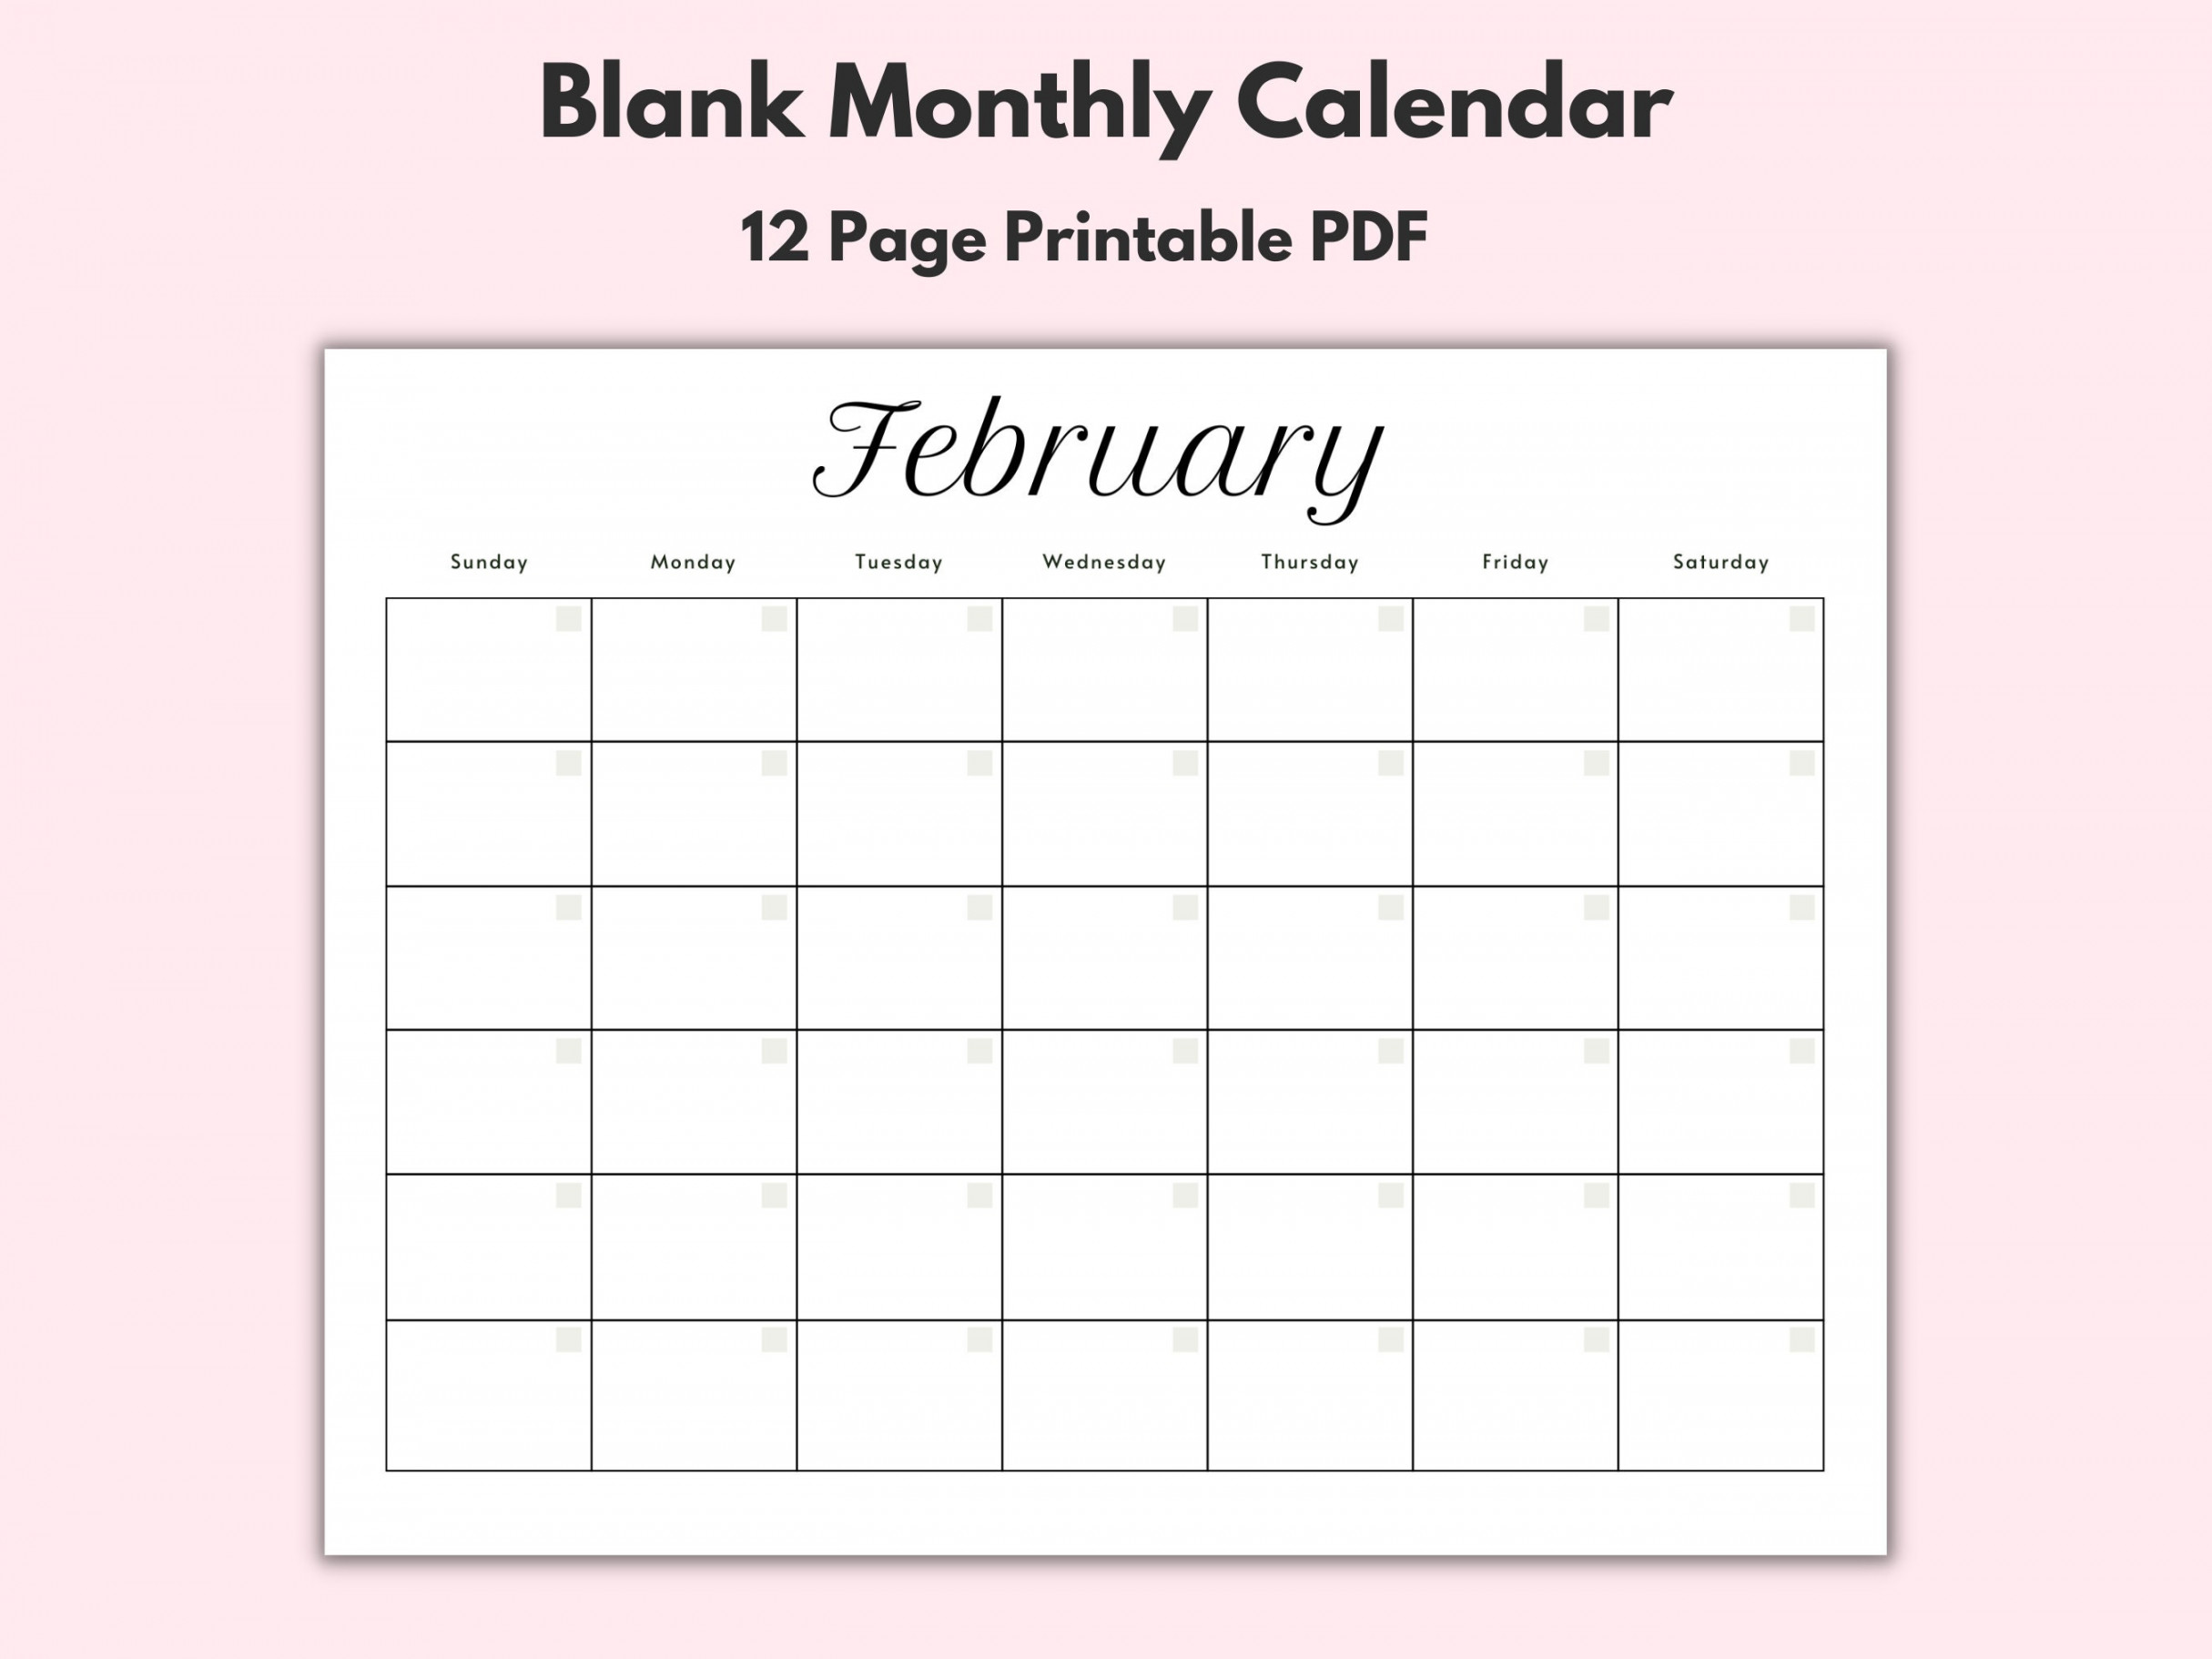 Monthly Blank Calendar, Printable Calendar Template, Horizontal